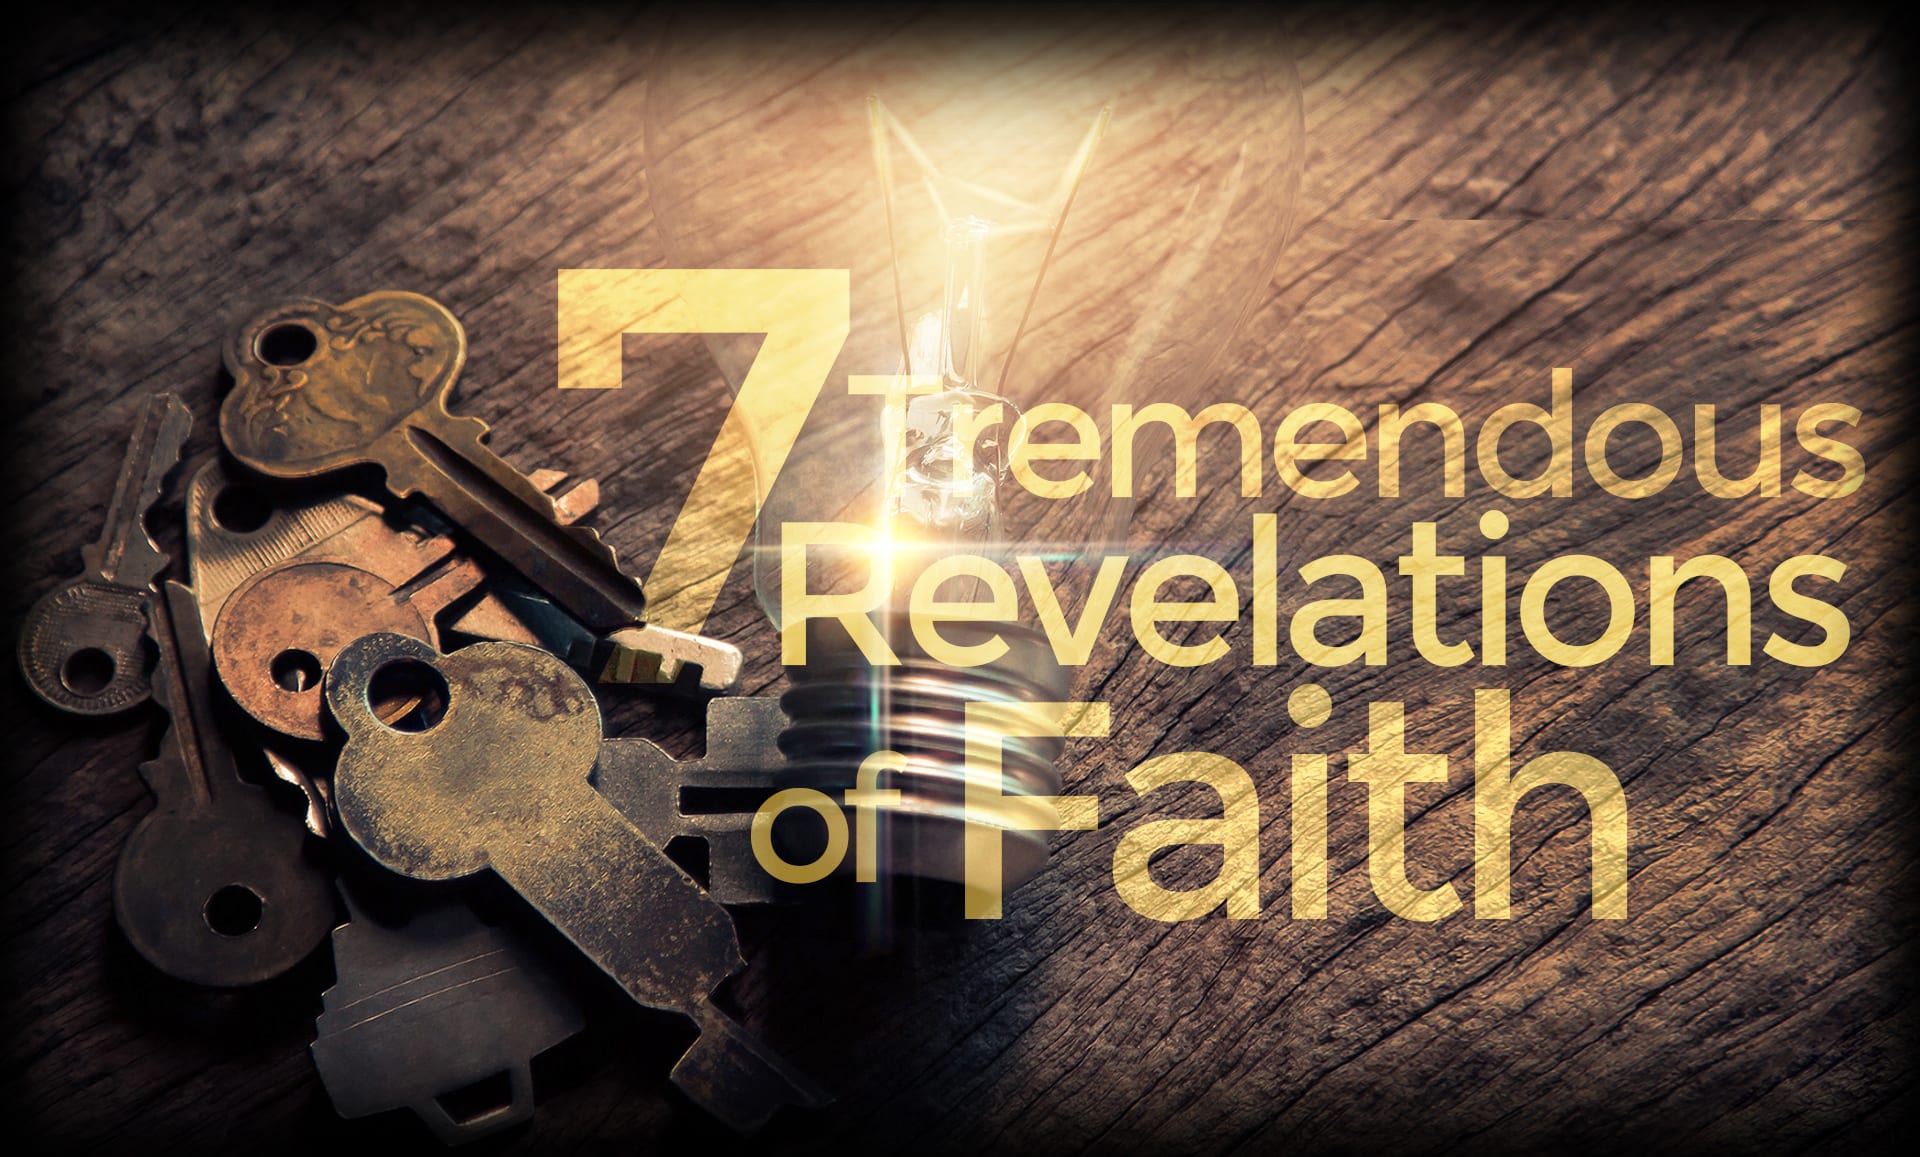 7 Tremendous Revelations of Faith